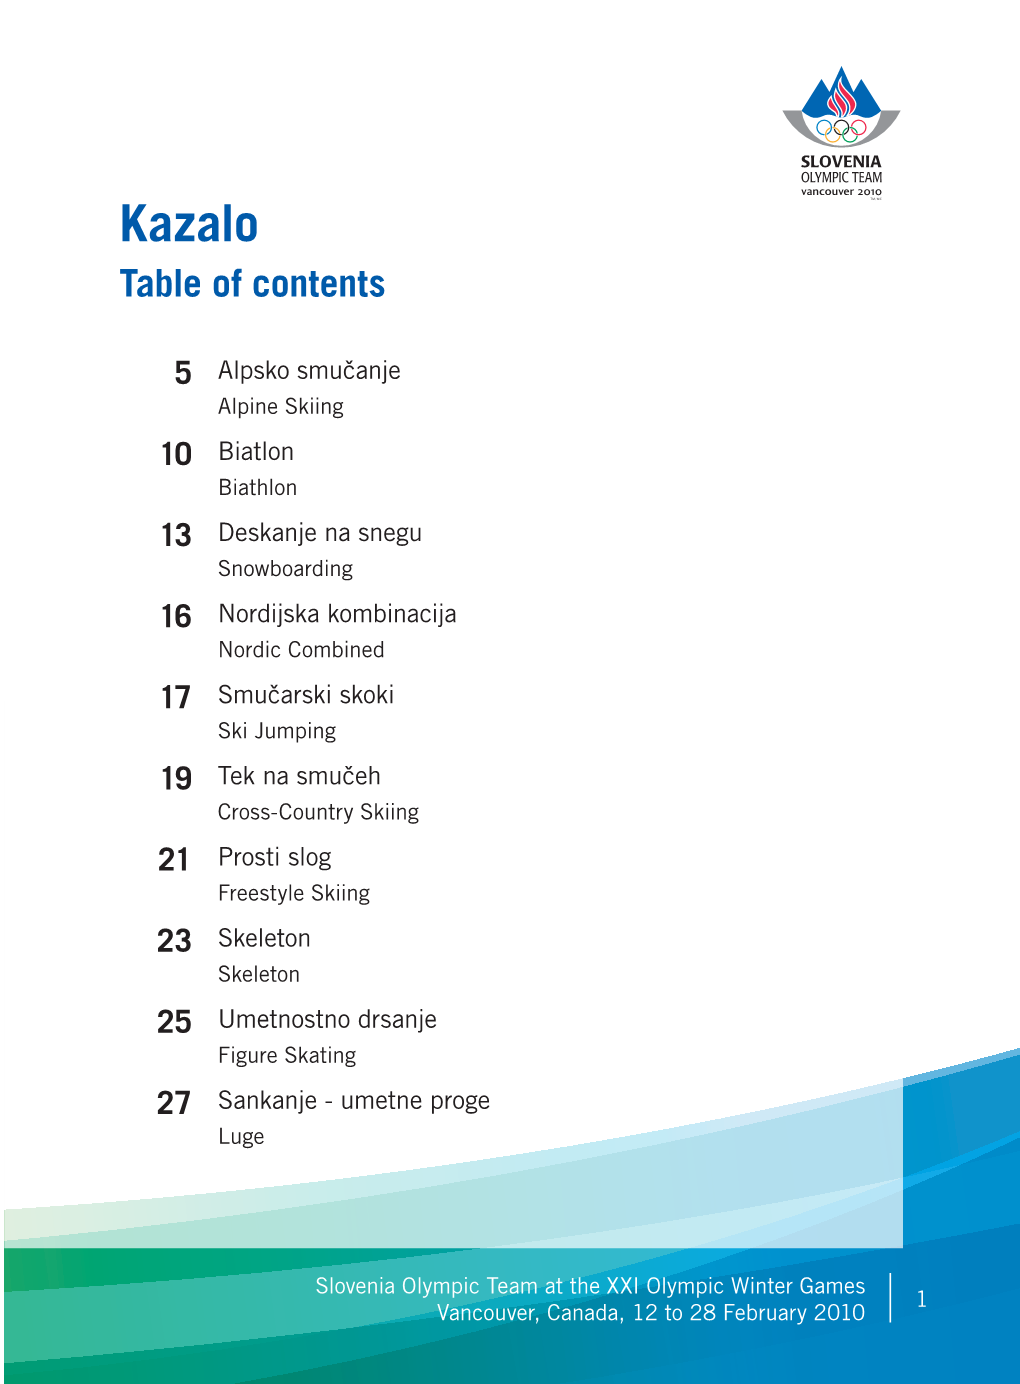 Kazalo Table of Contents